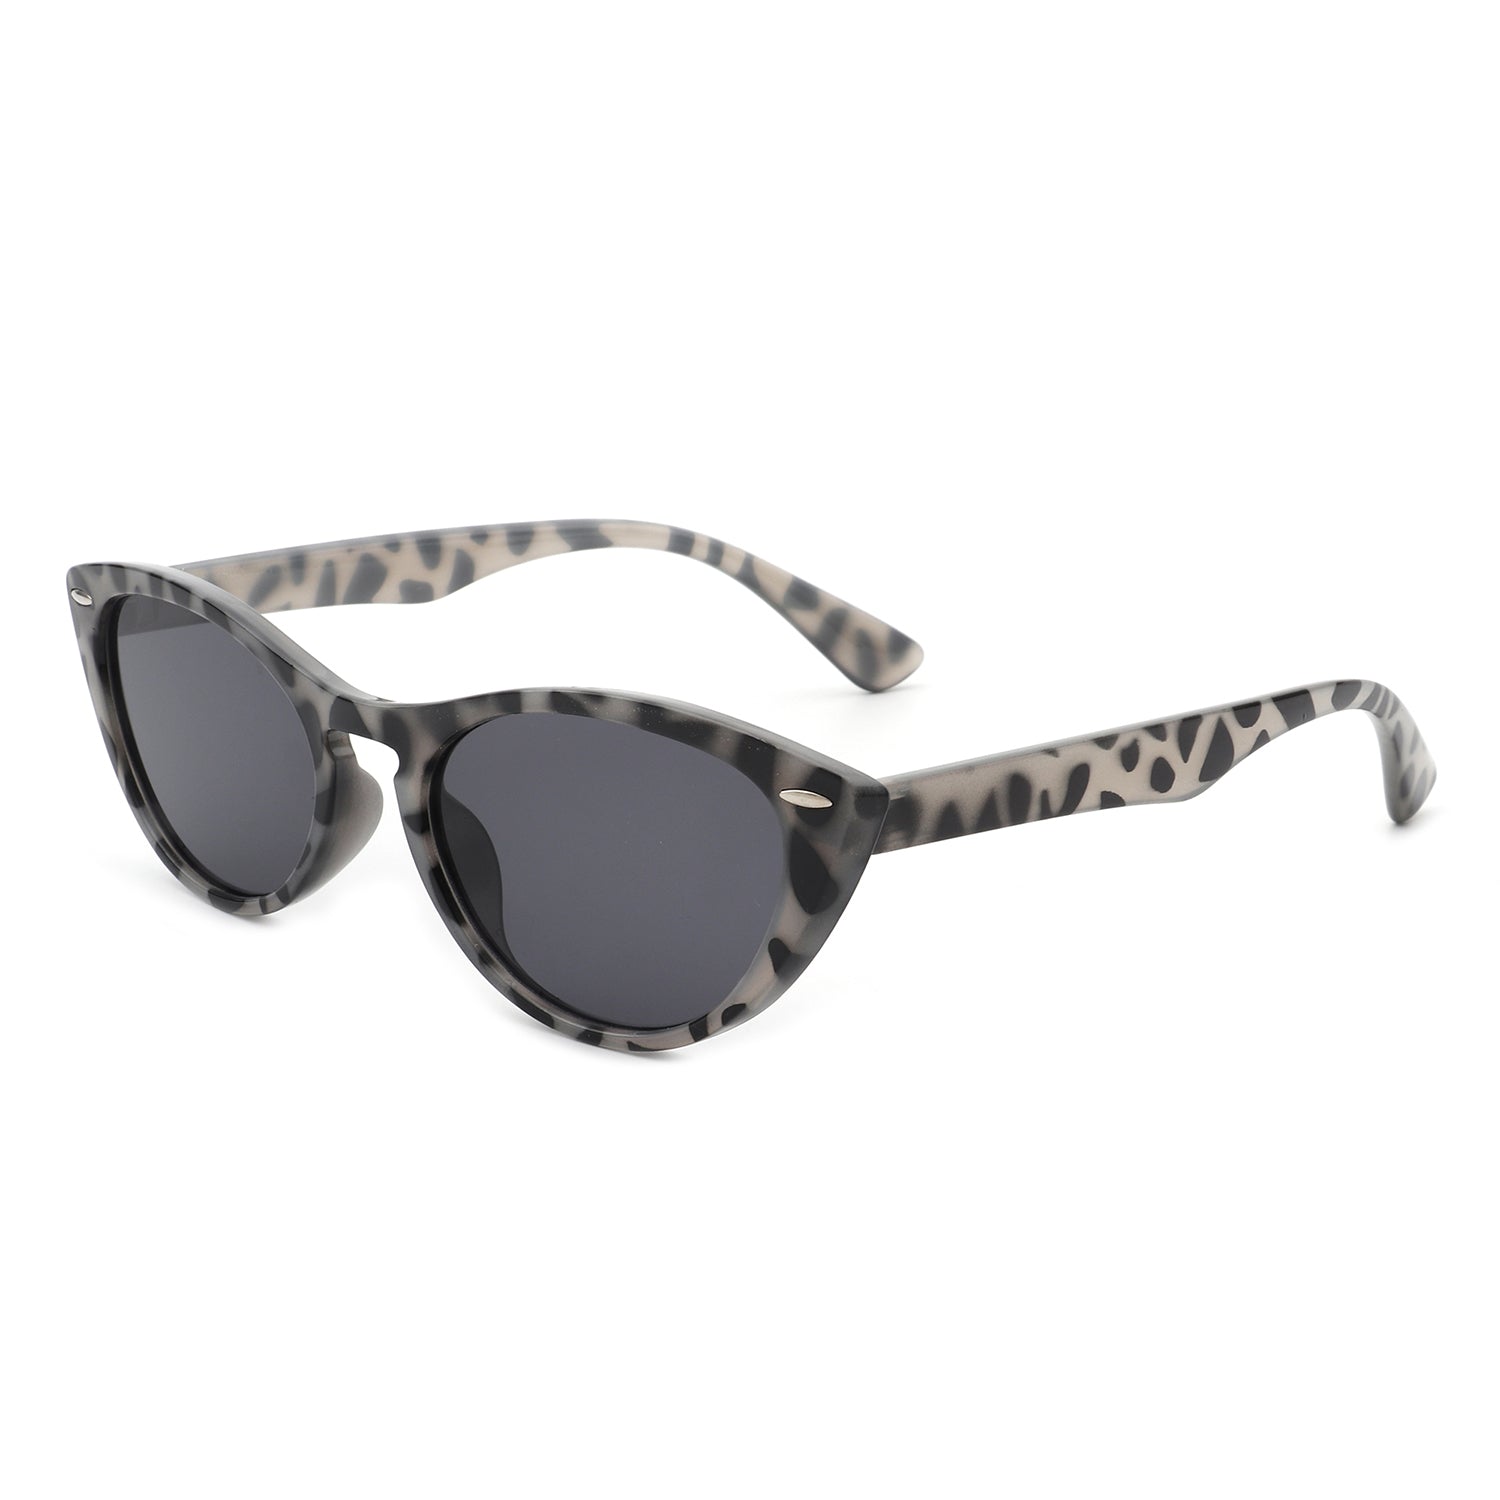 HS1061 - Classic Women Round Retro Fashion Cat Eye Sunglasses